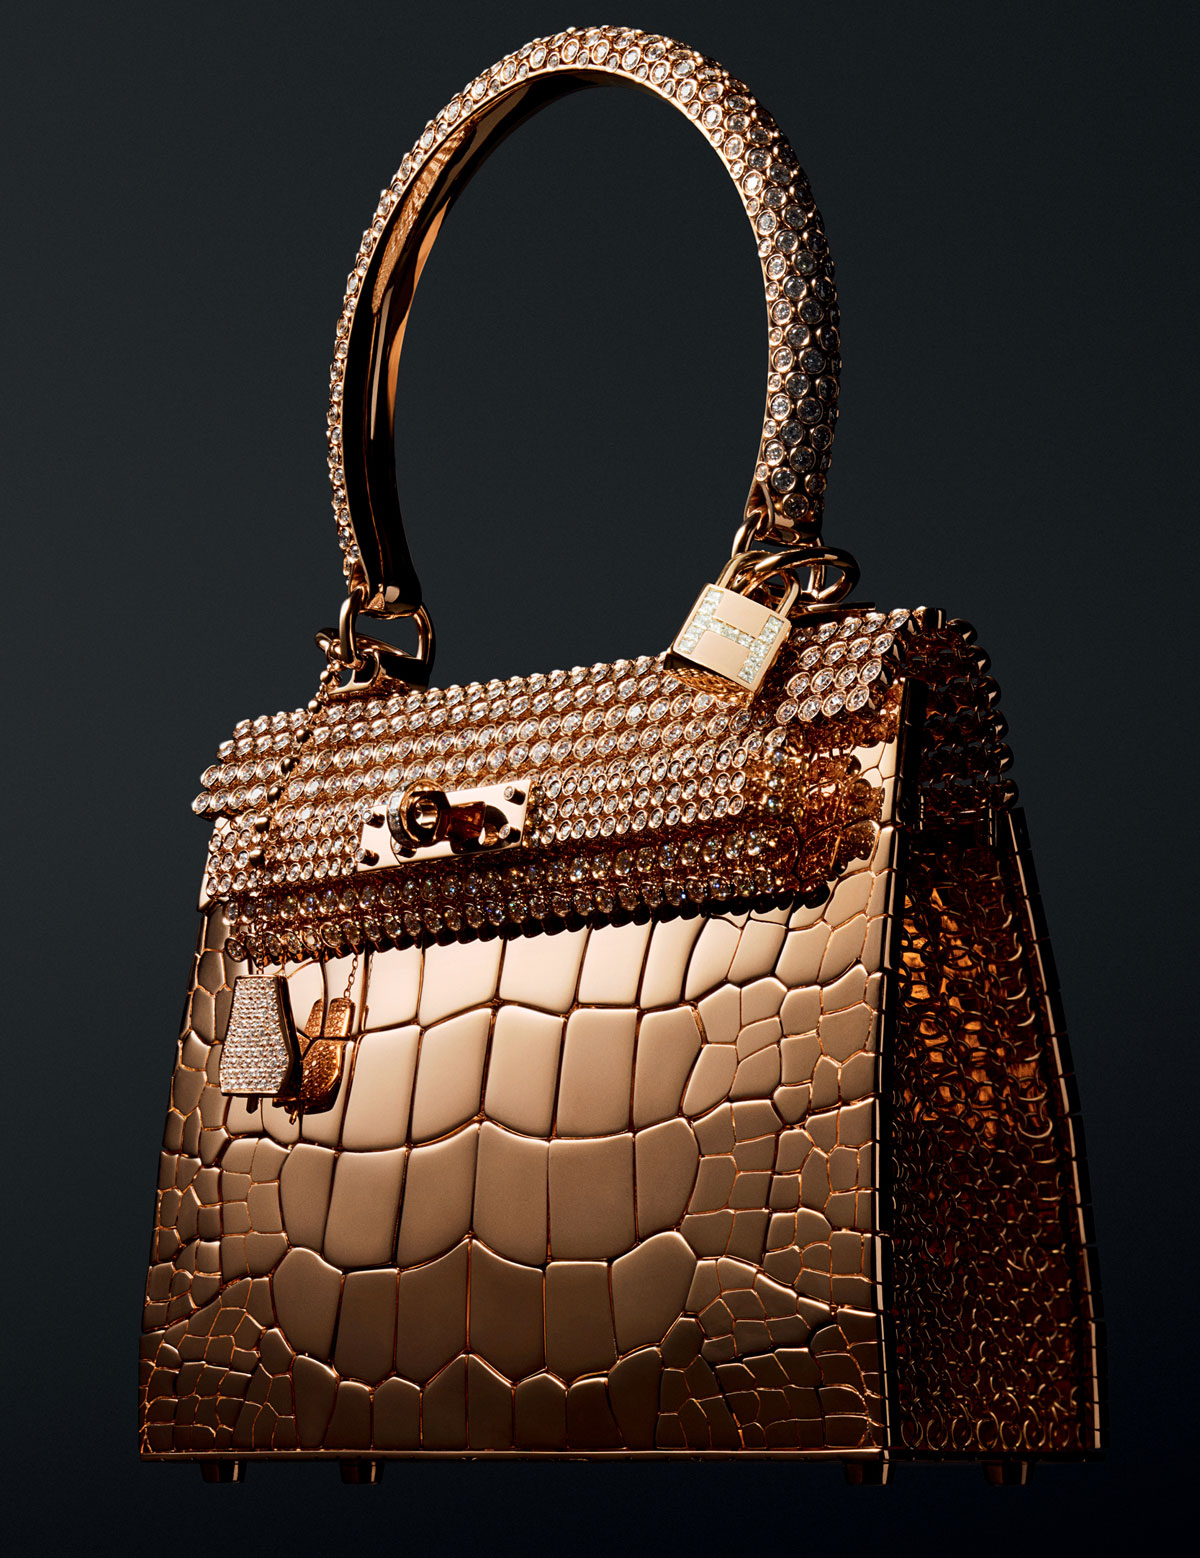 Hermes Create $1.9 Million Diamond-studded Birkin Handbag - eXtravaganzi